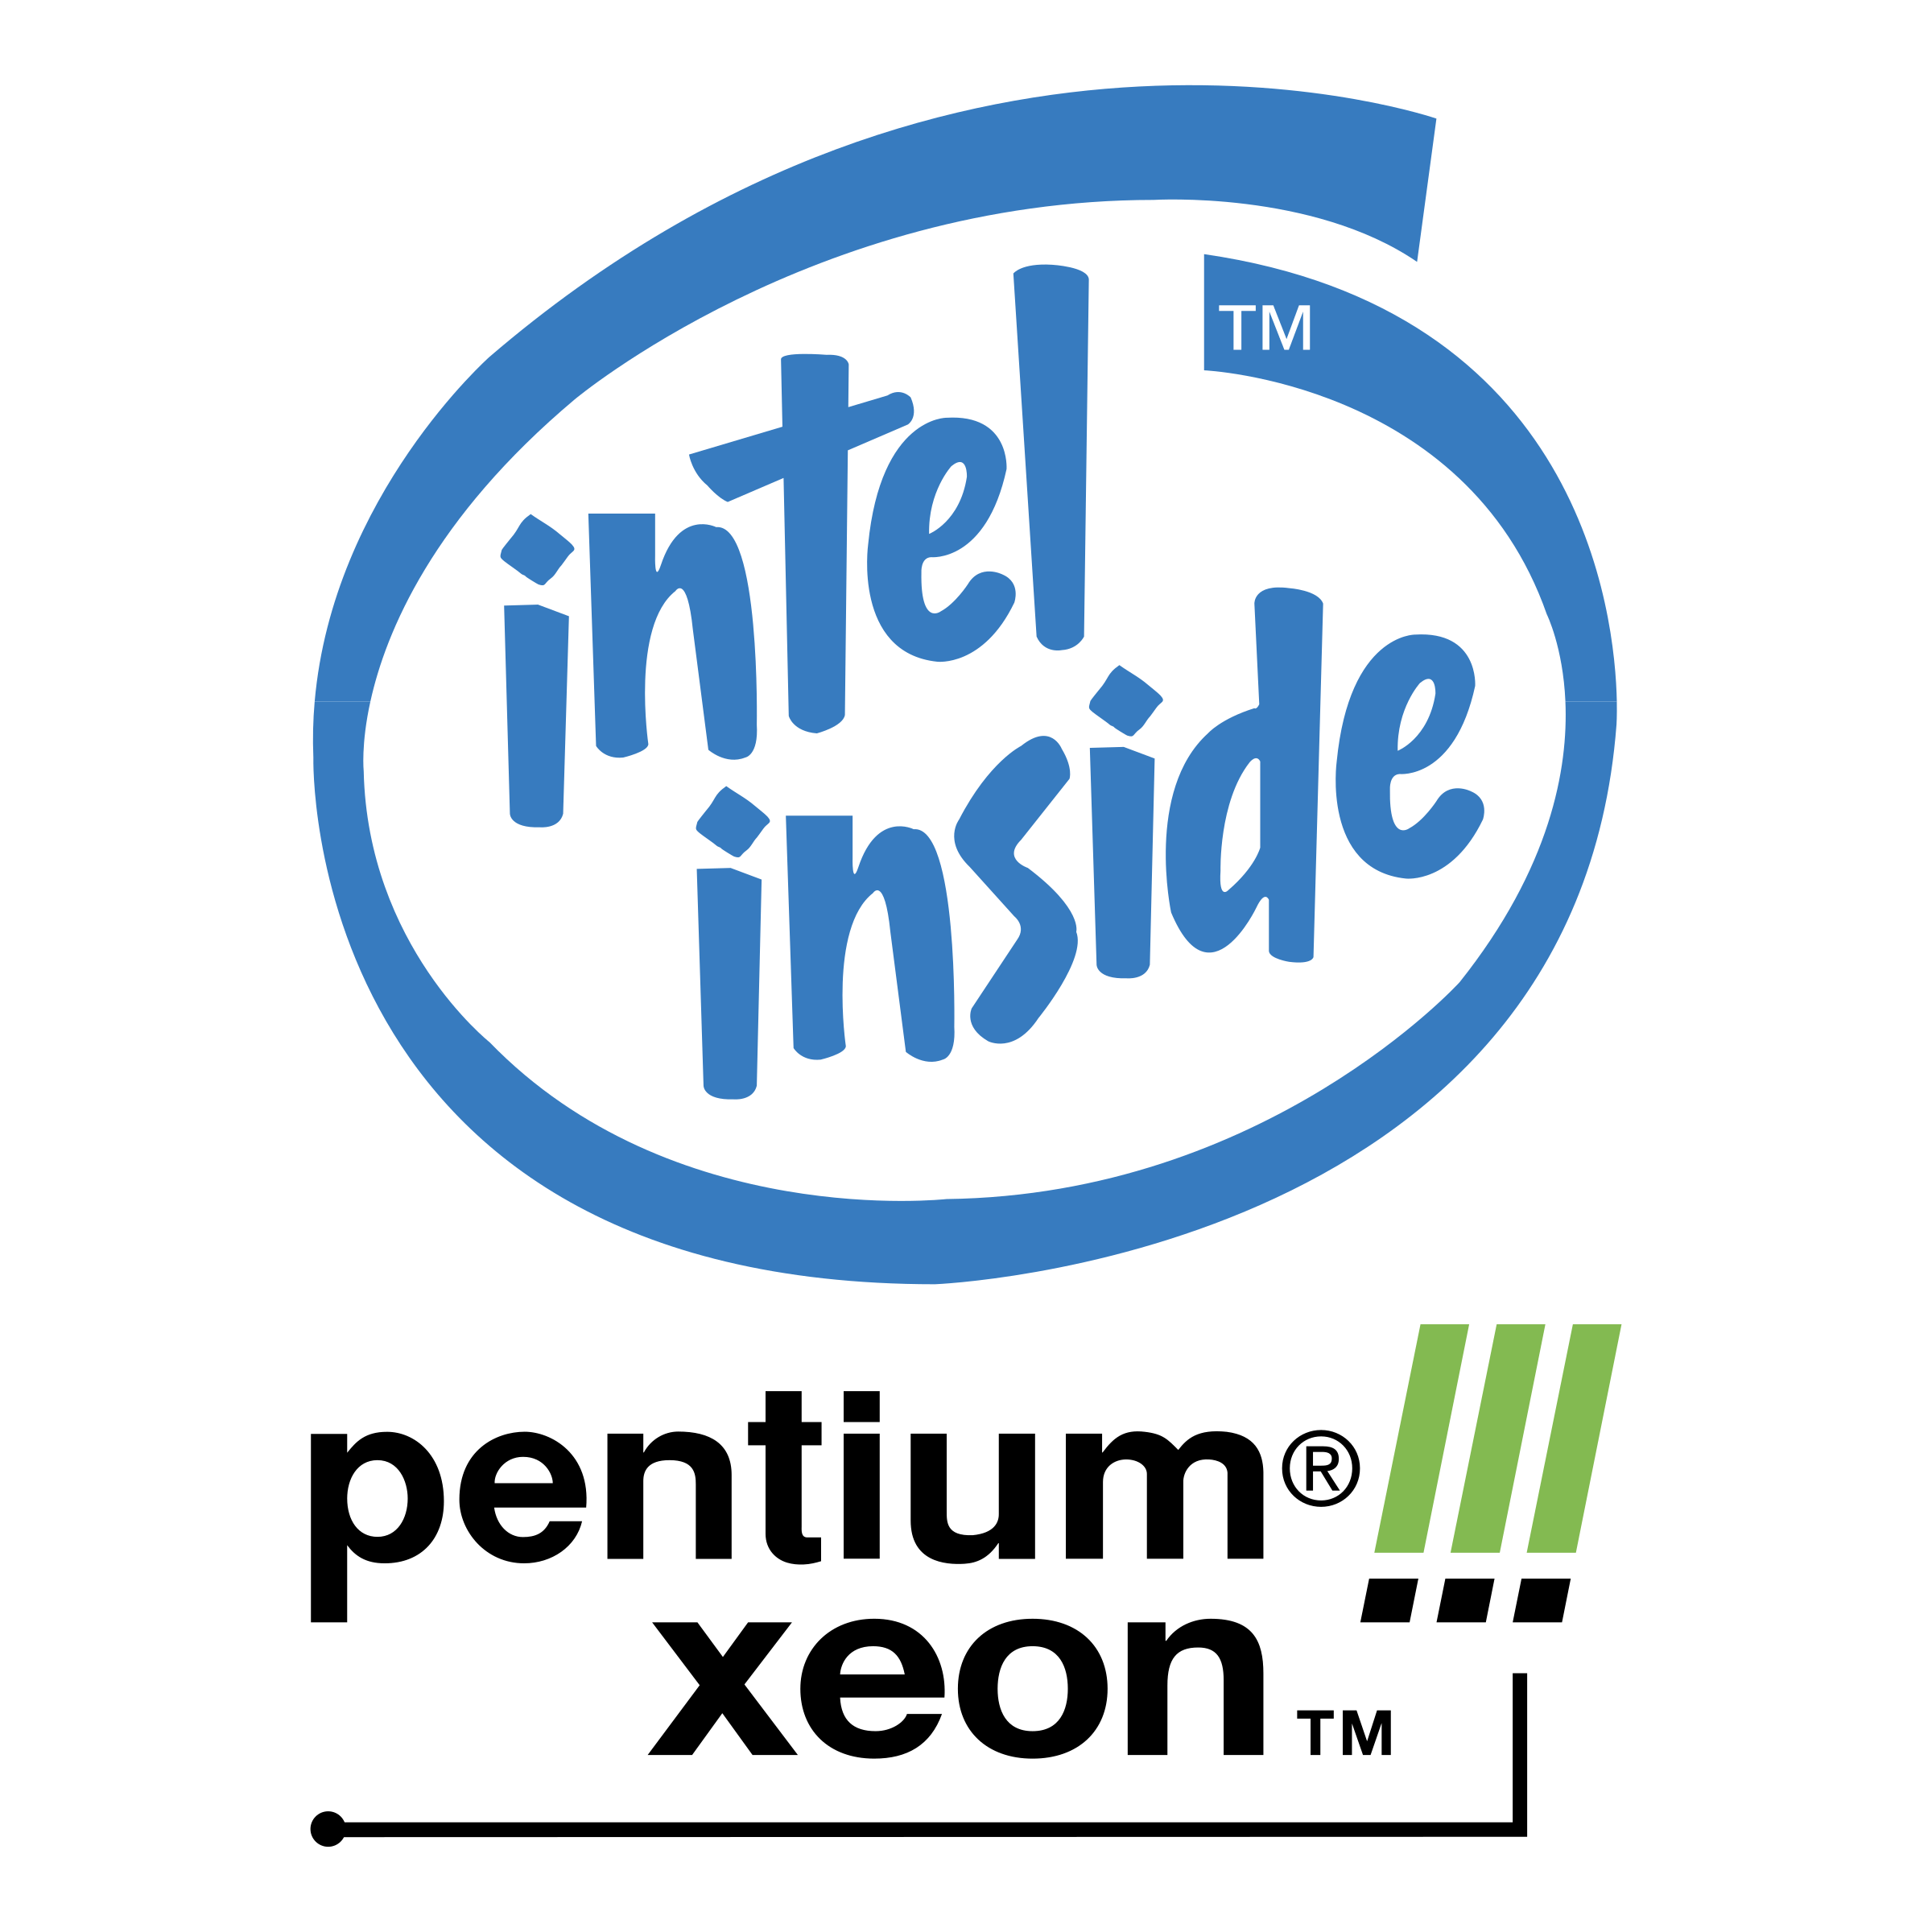 Xeon Logo - Pentium III Xeon Processor Logo PNG Transparent & SVG Vector ...